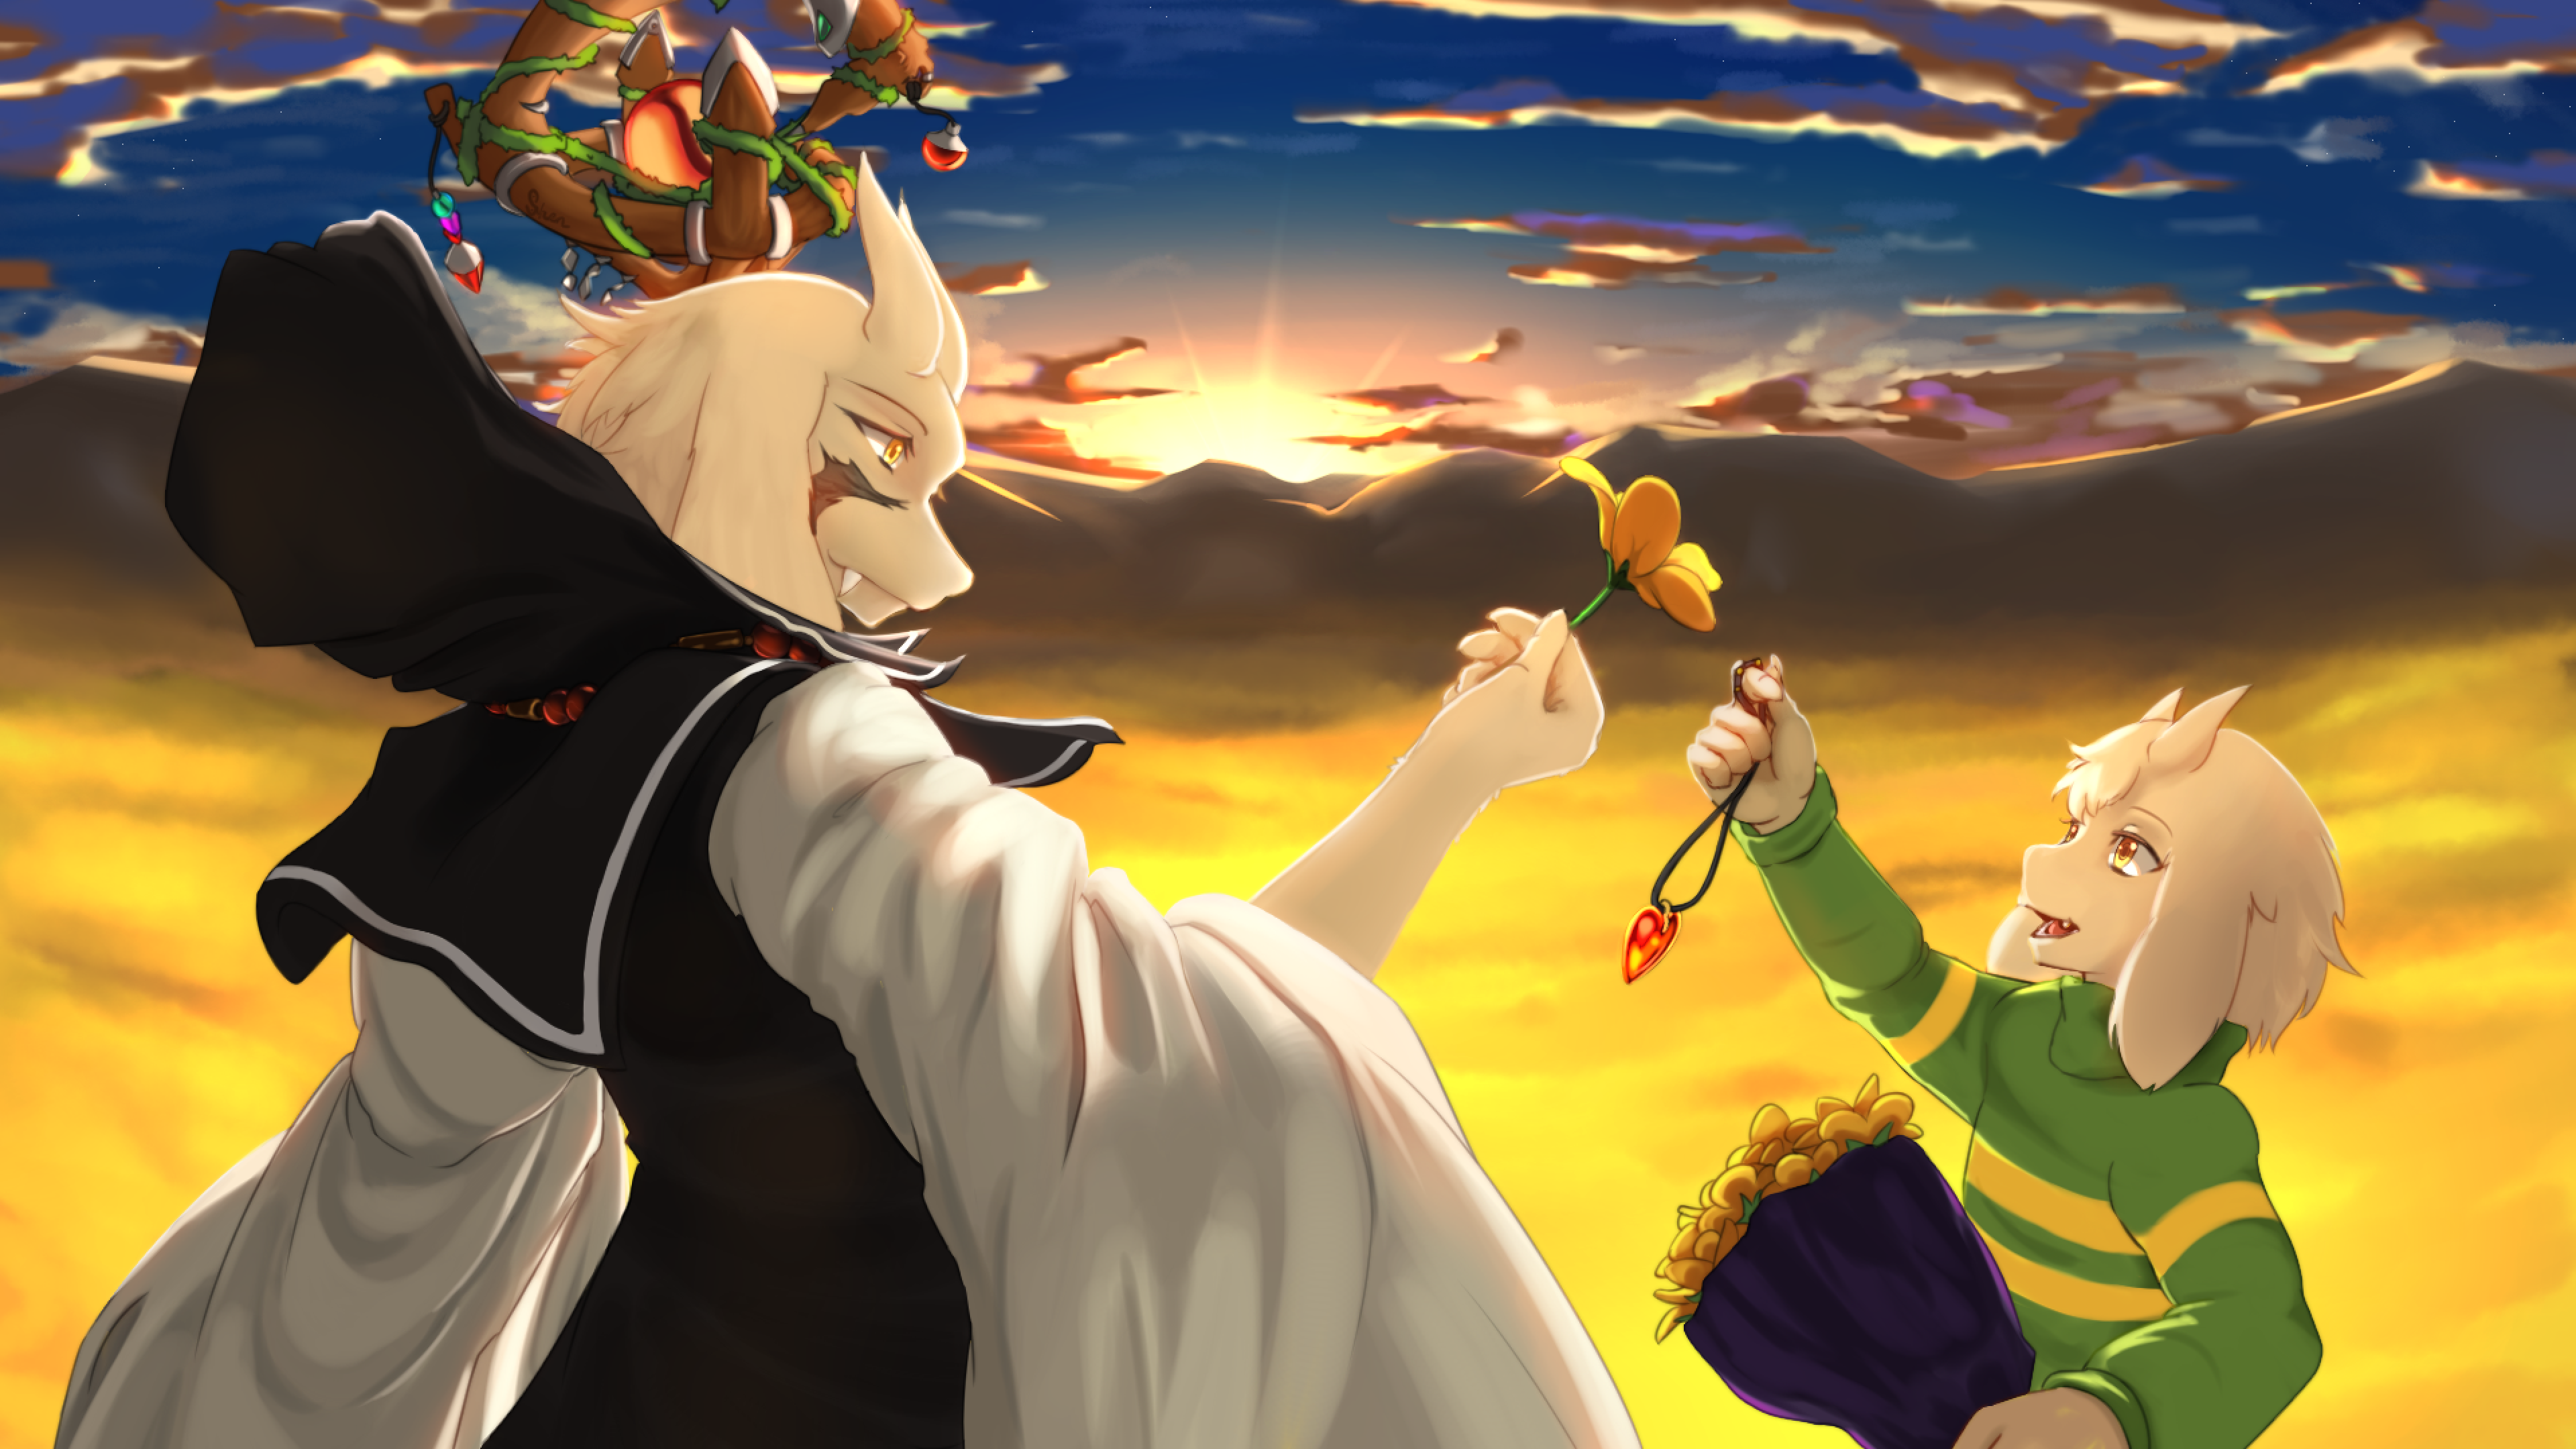 Asriel Dreemurr, Undertale, Sunset, Anime Style, Artwork - Asriel Dreemurr  - 3840x2160 Wallpaper 